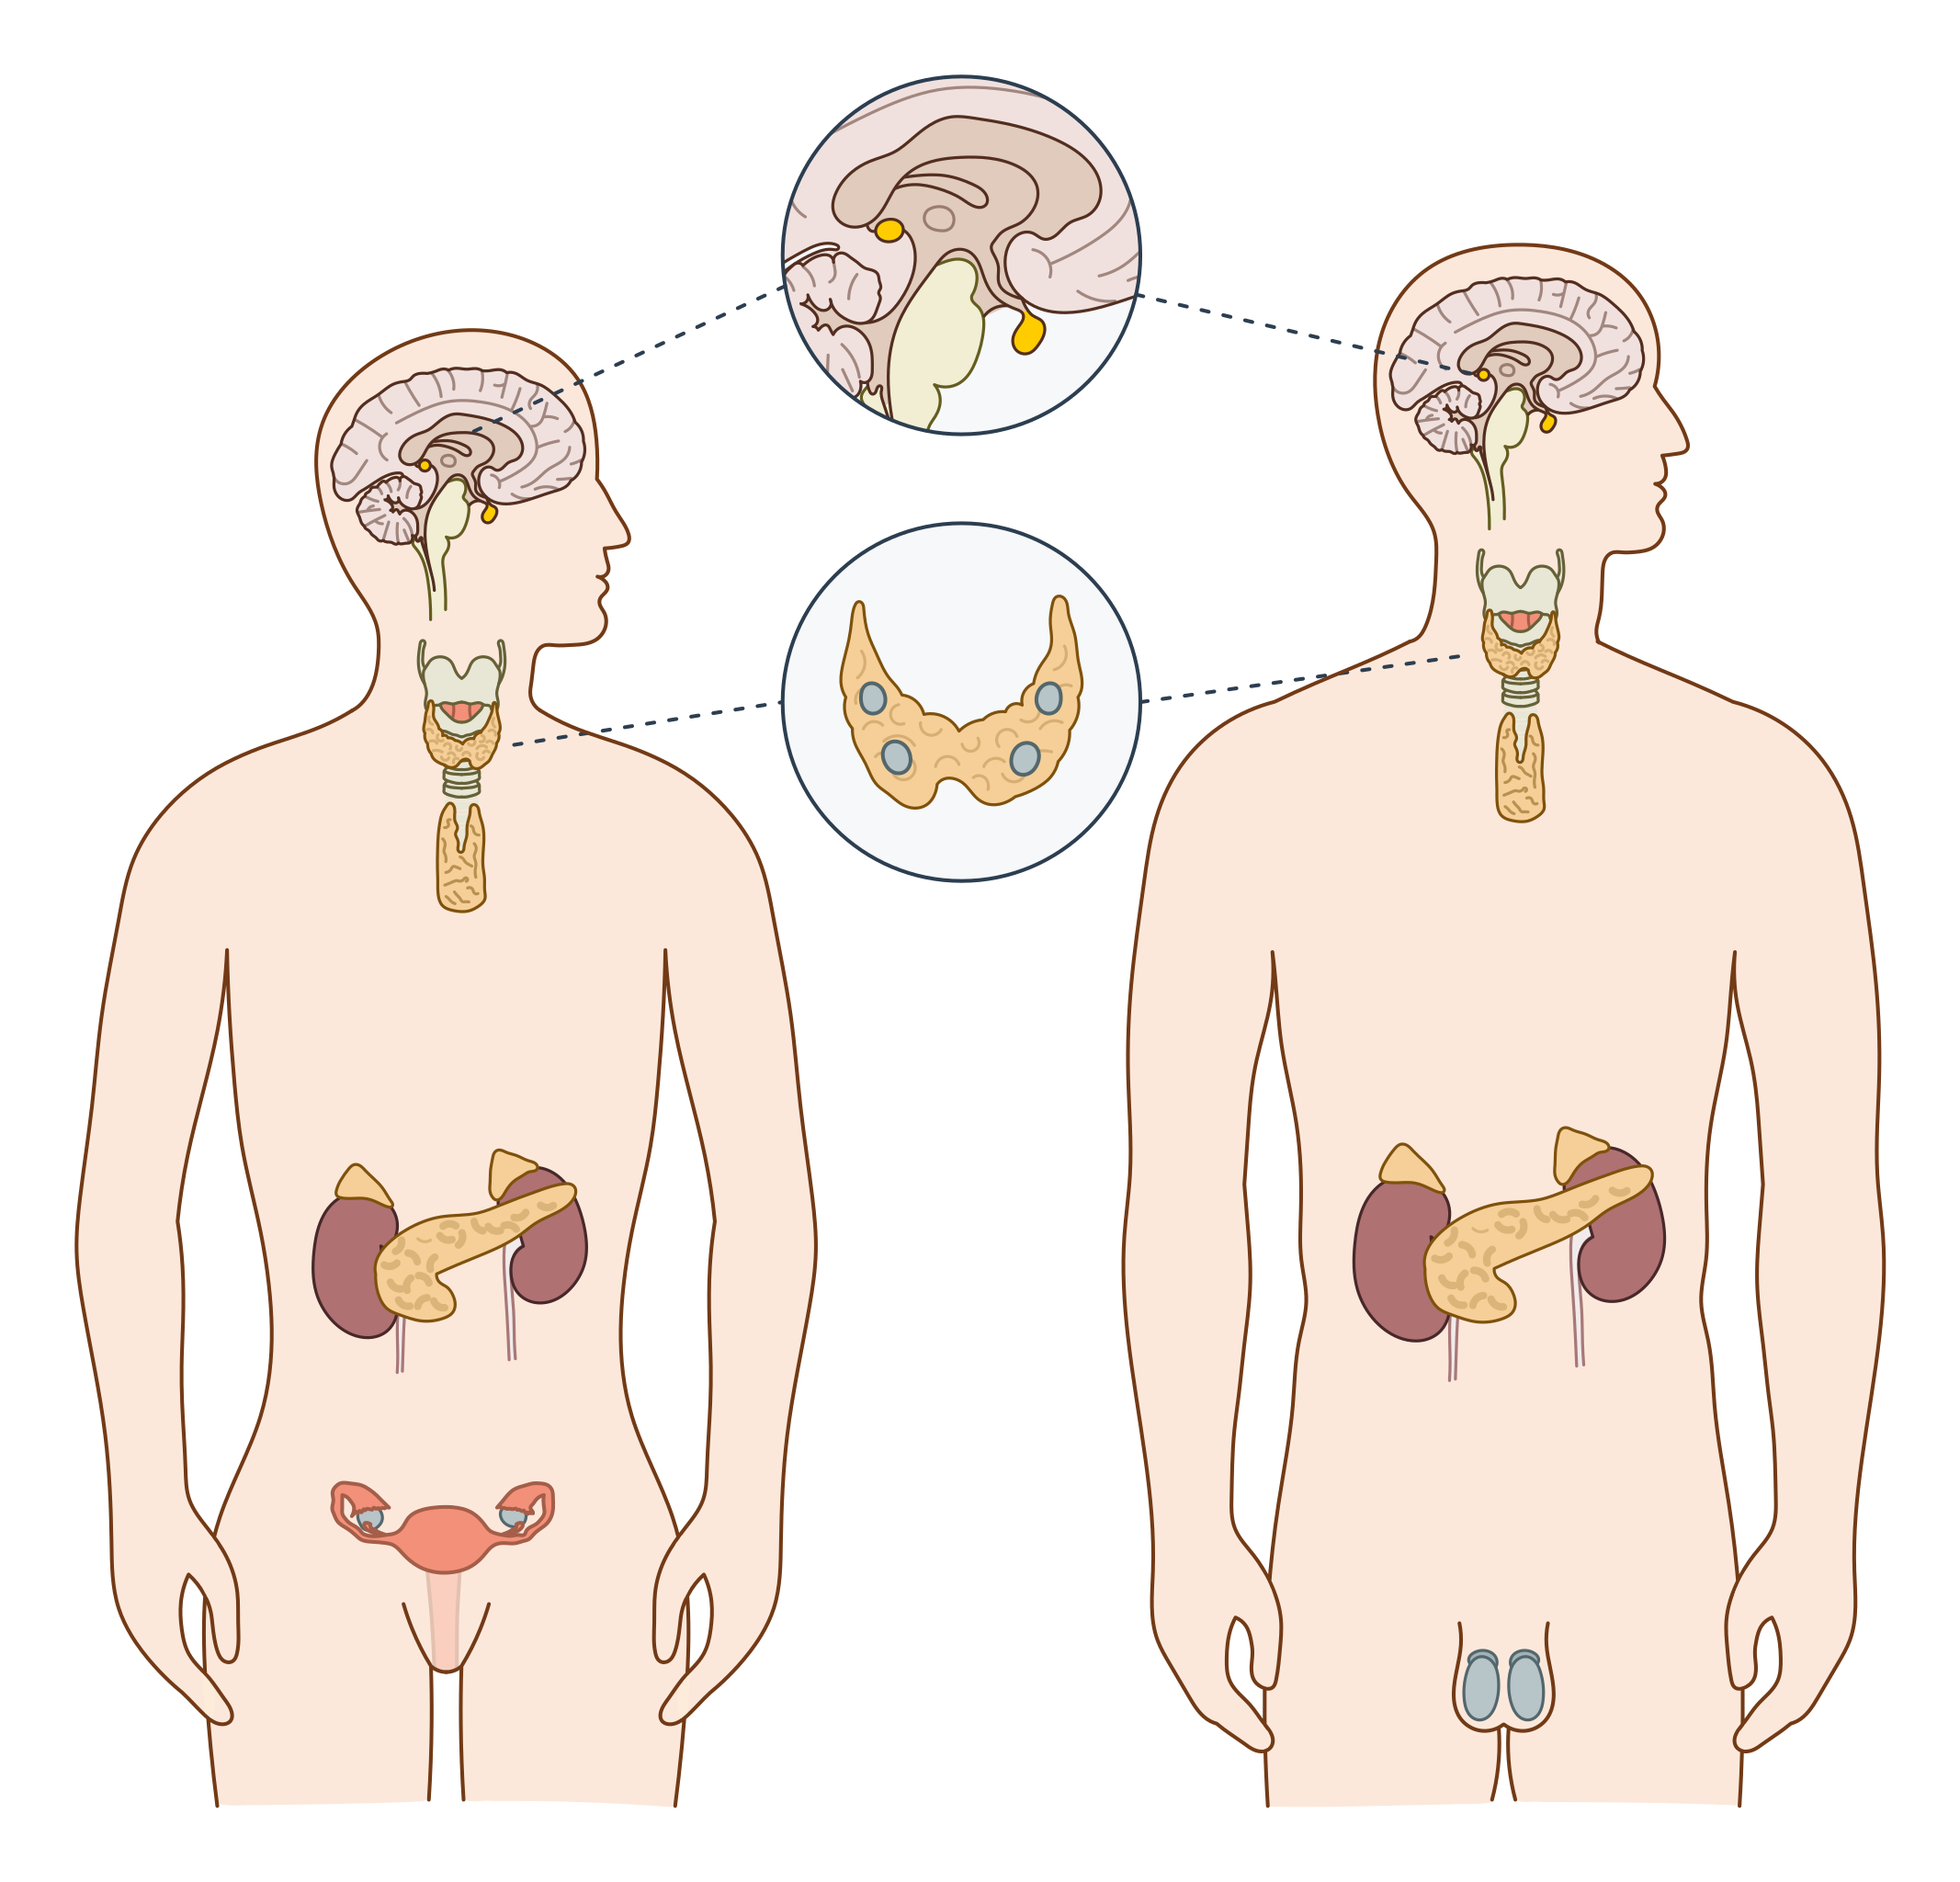 endocrine system labeled